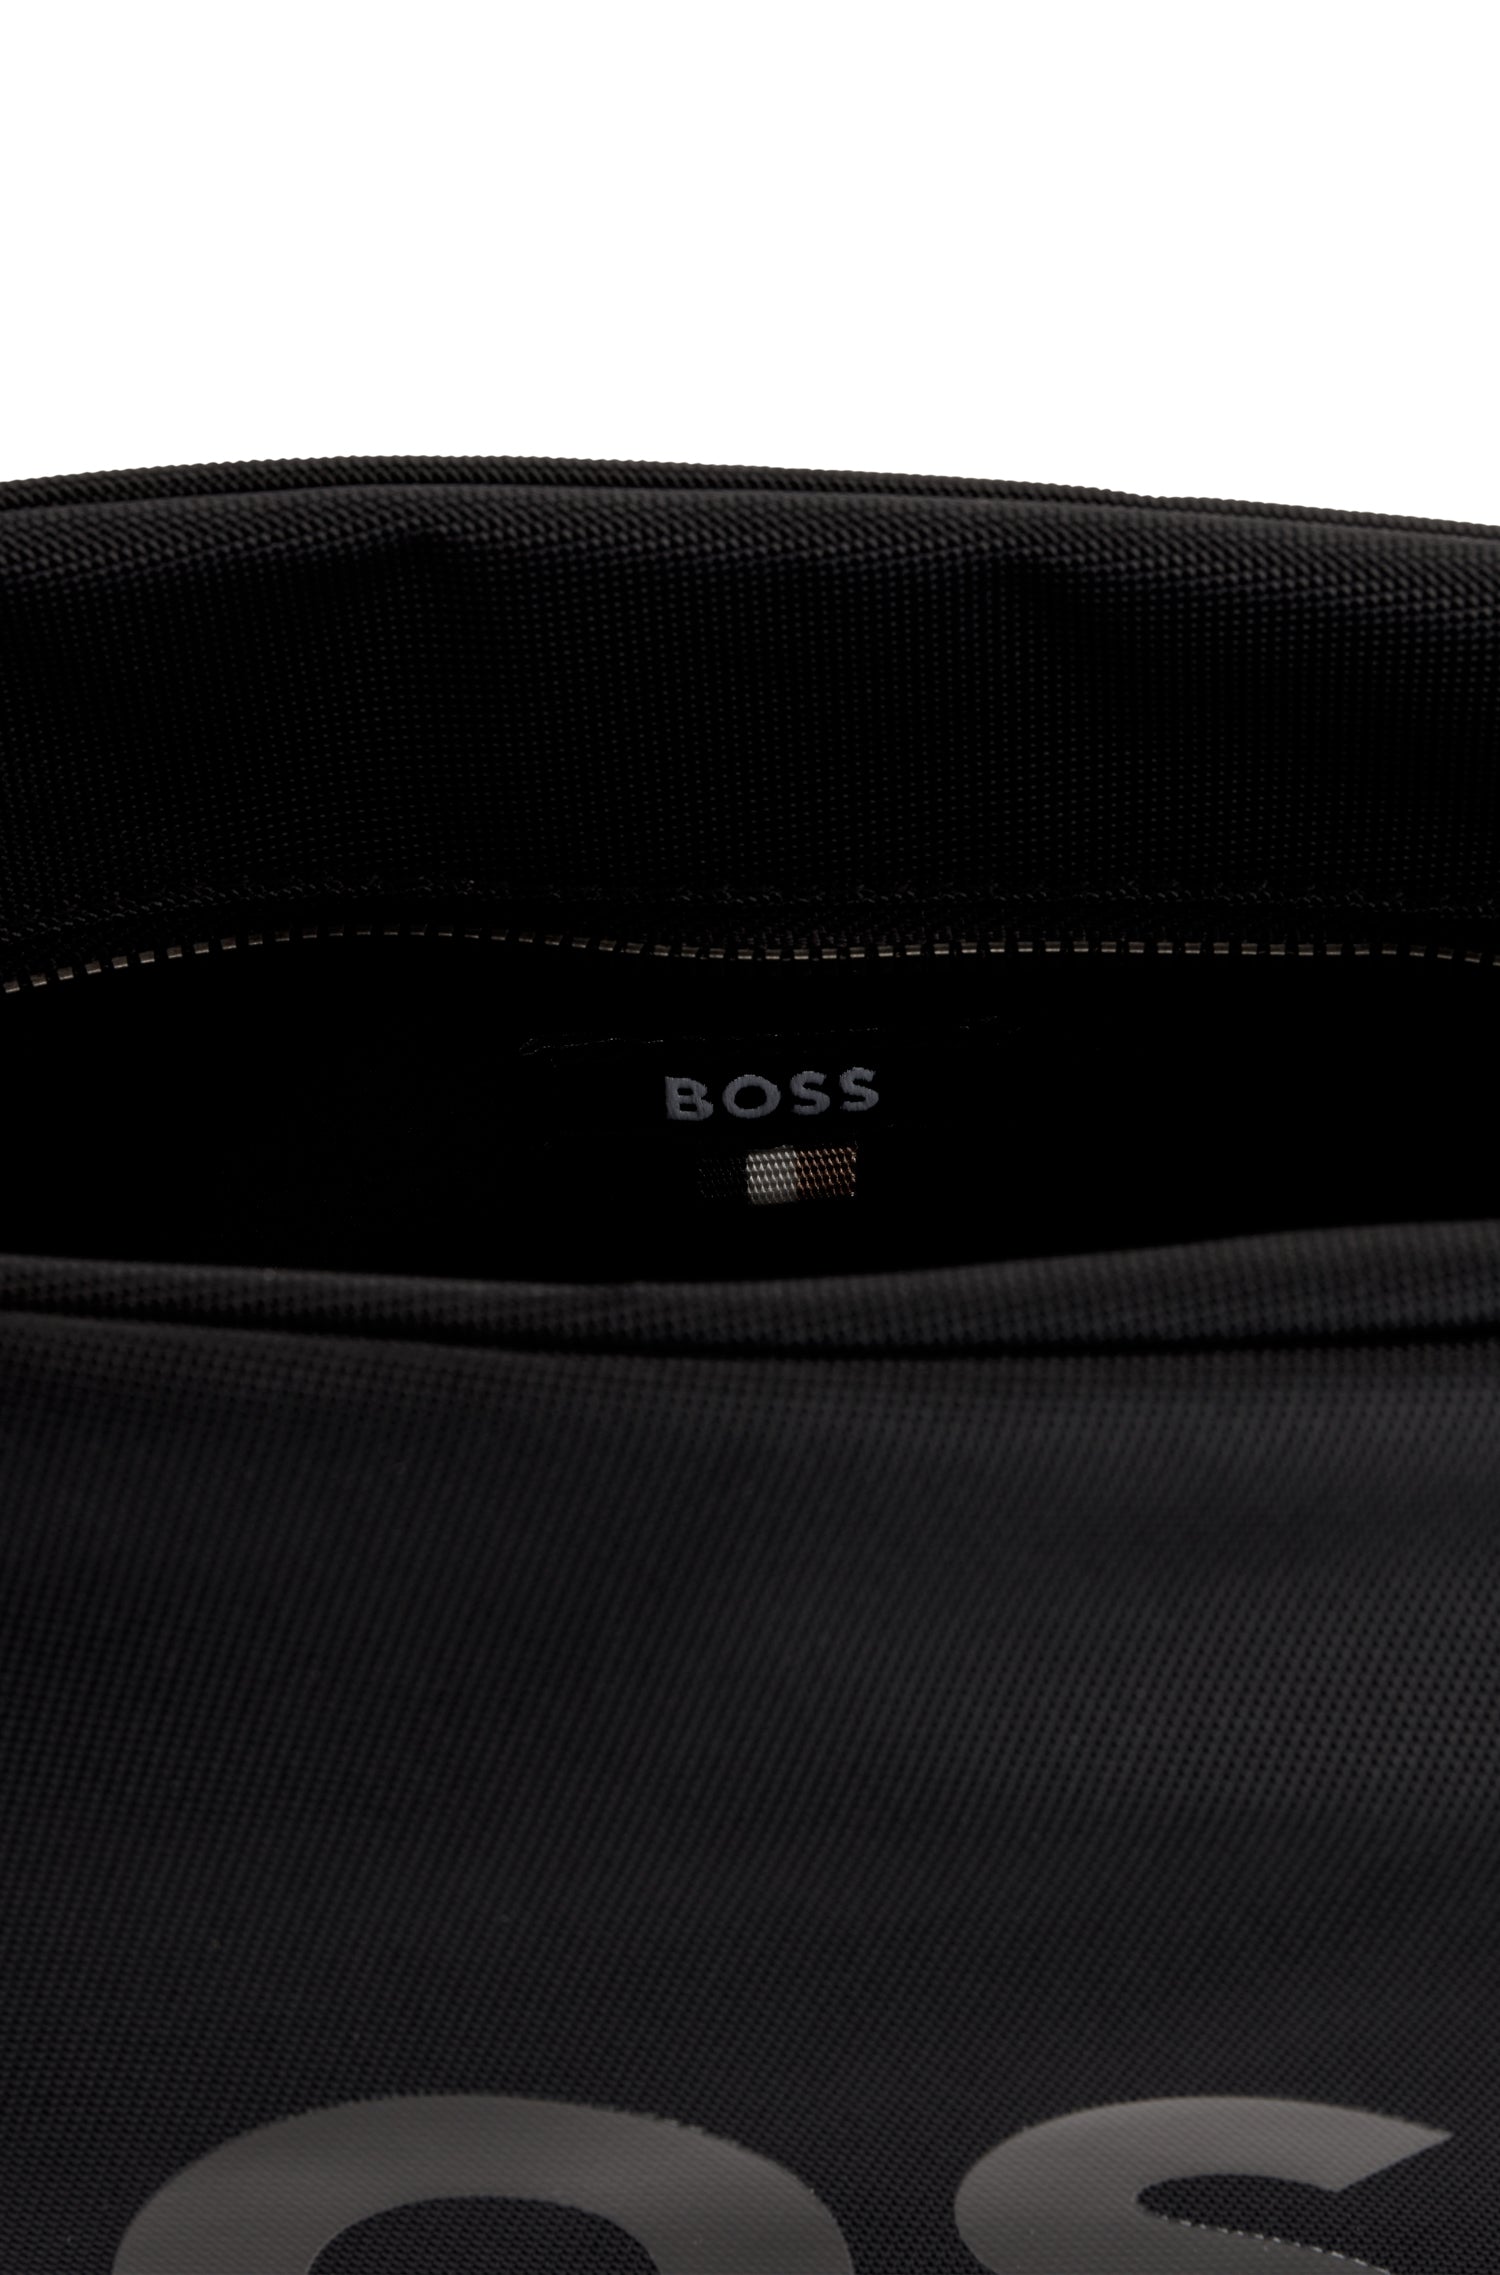 Hugo Boss Pixel G_S Zip Envelope Bag - Tramps the Store